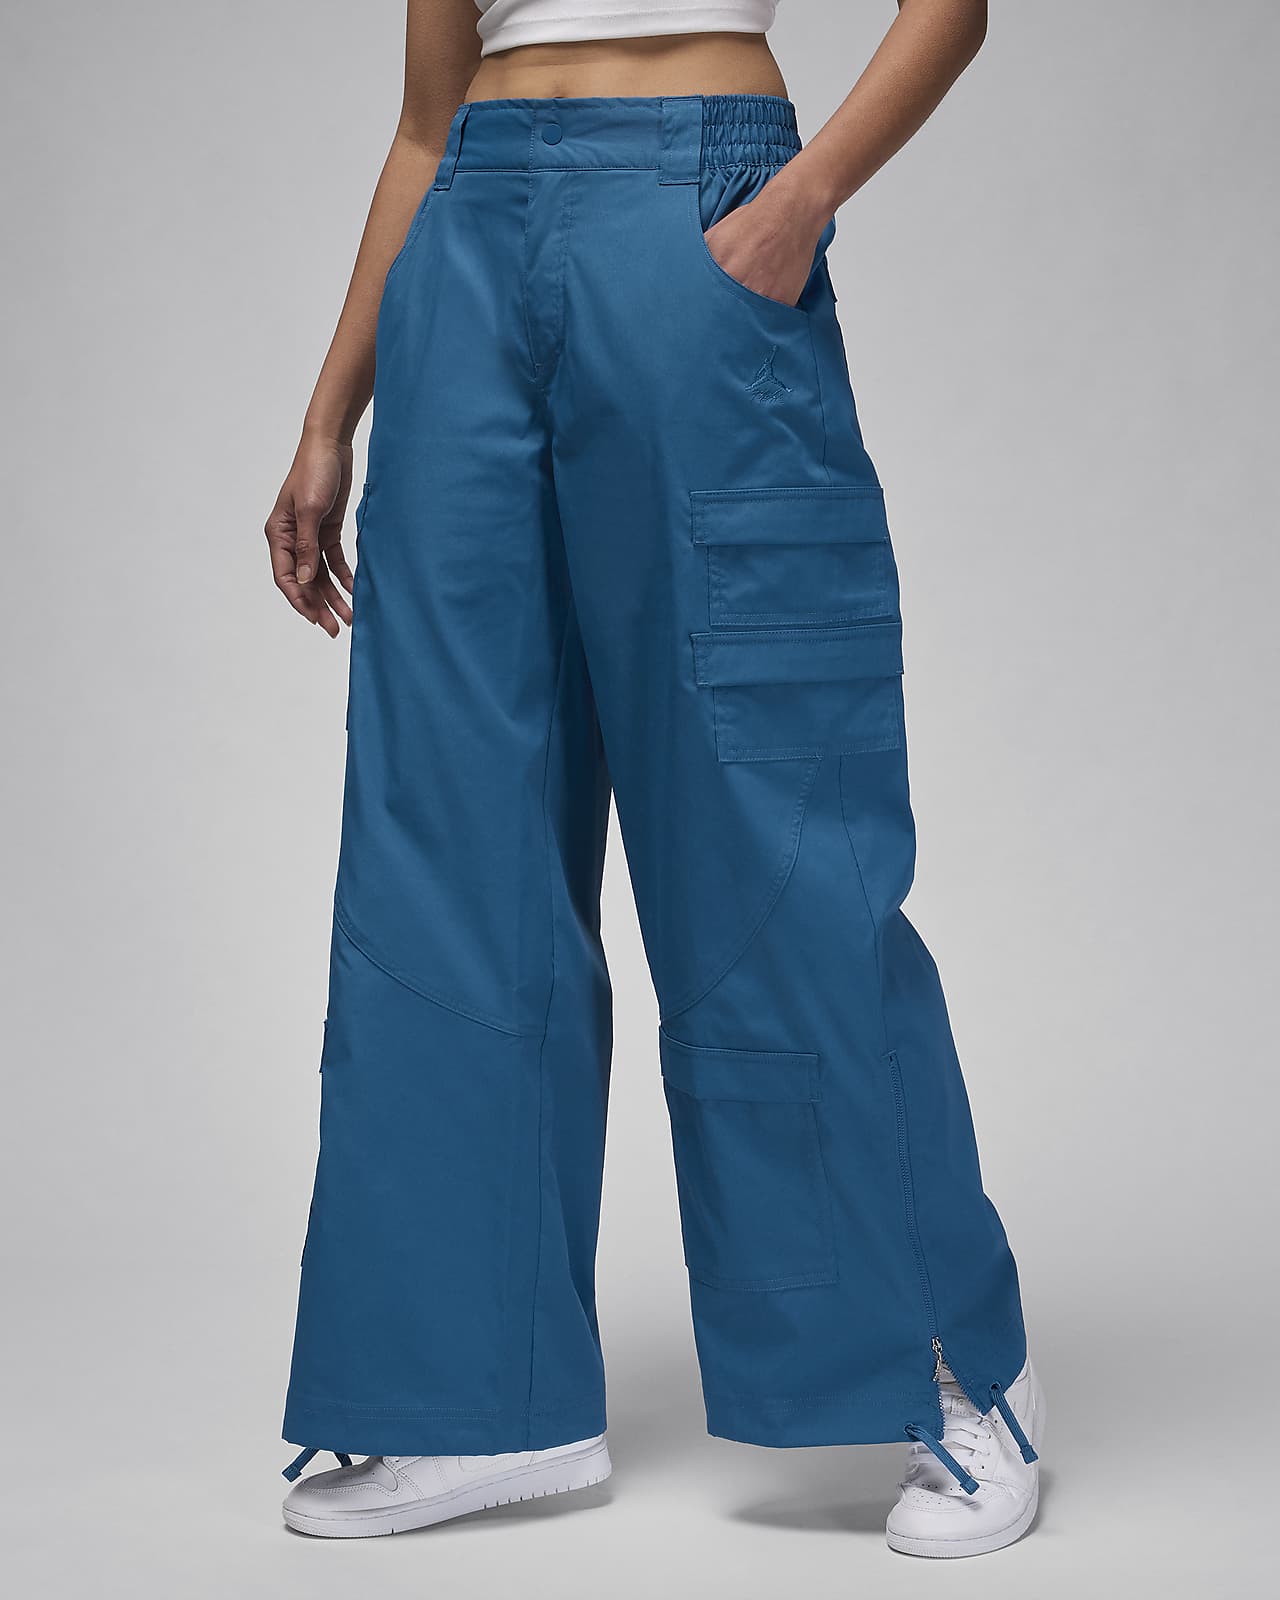 Women's blue Pants